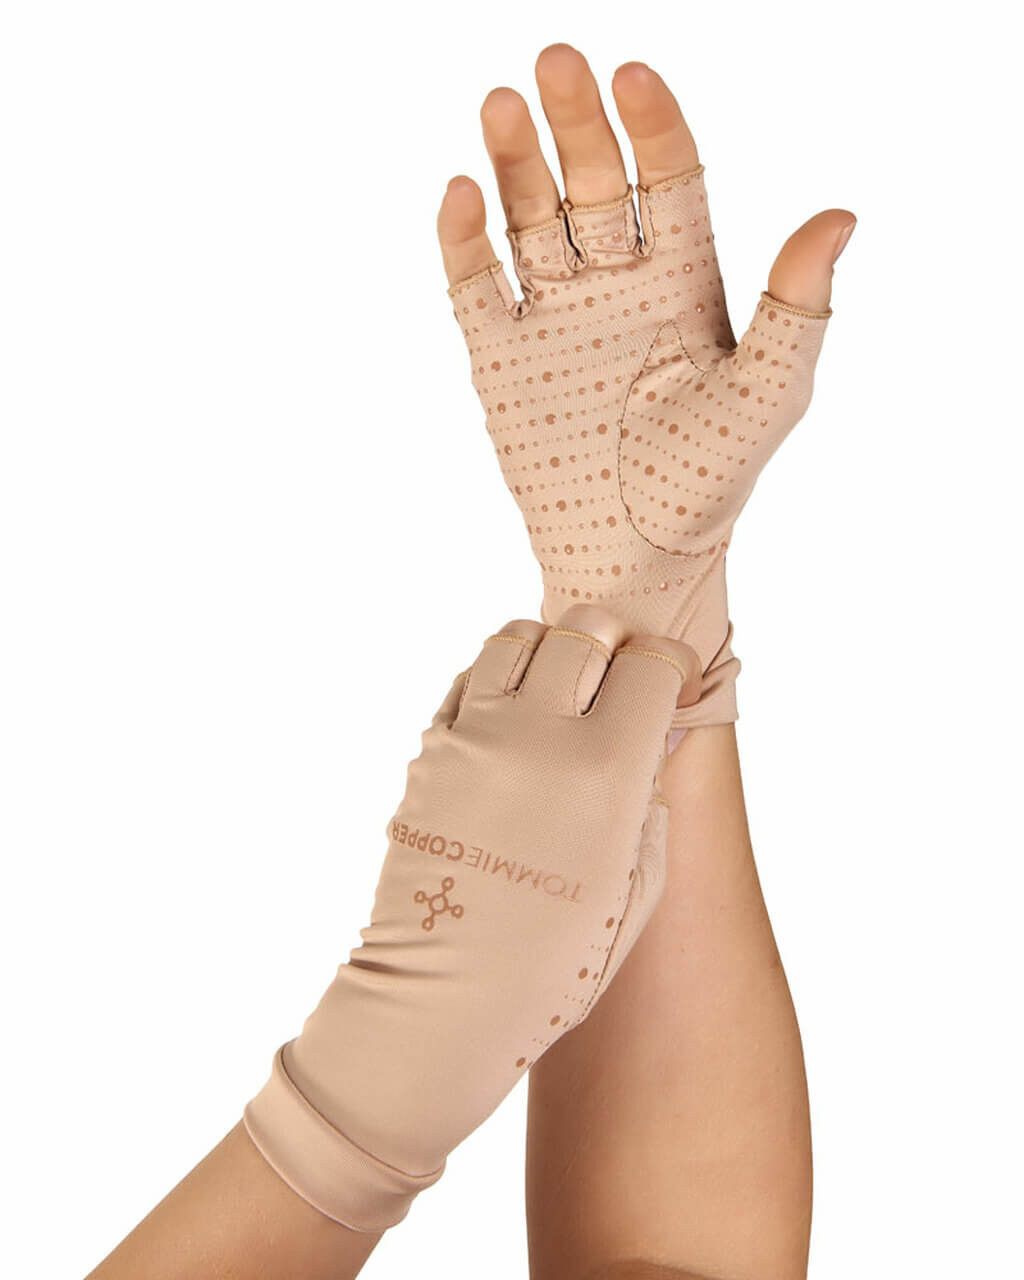 Copper88 Wrist Compression Sleeve, Anti-odour